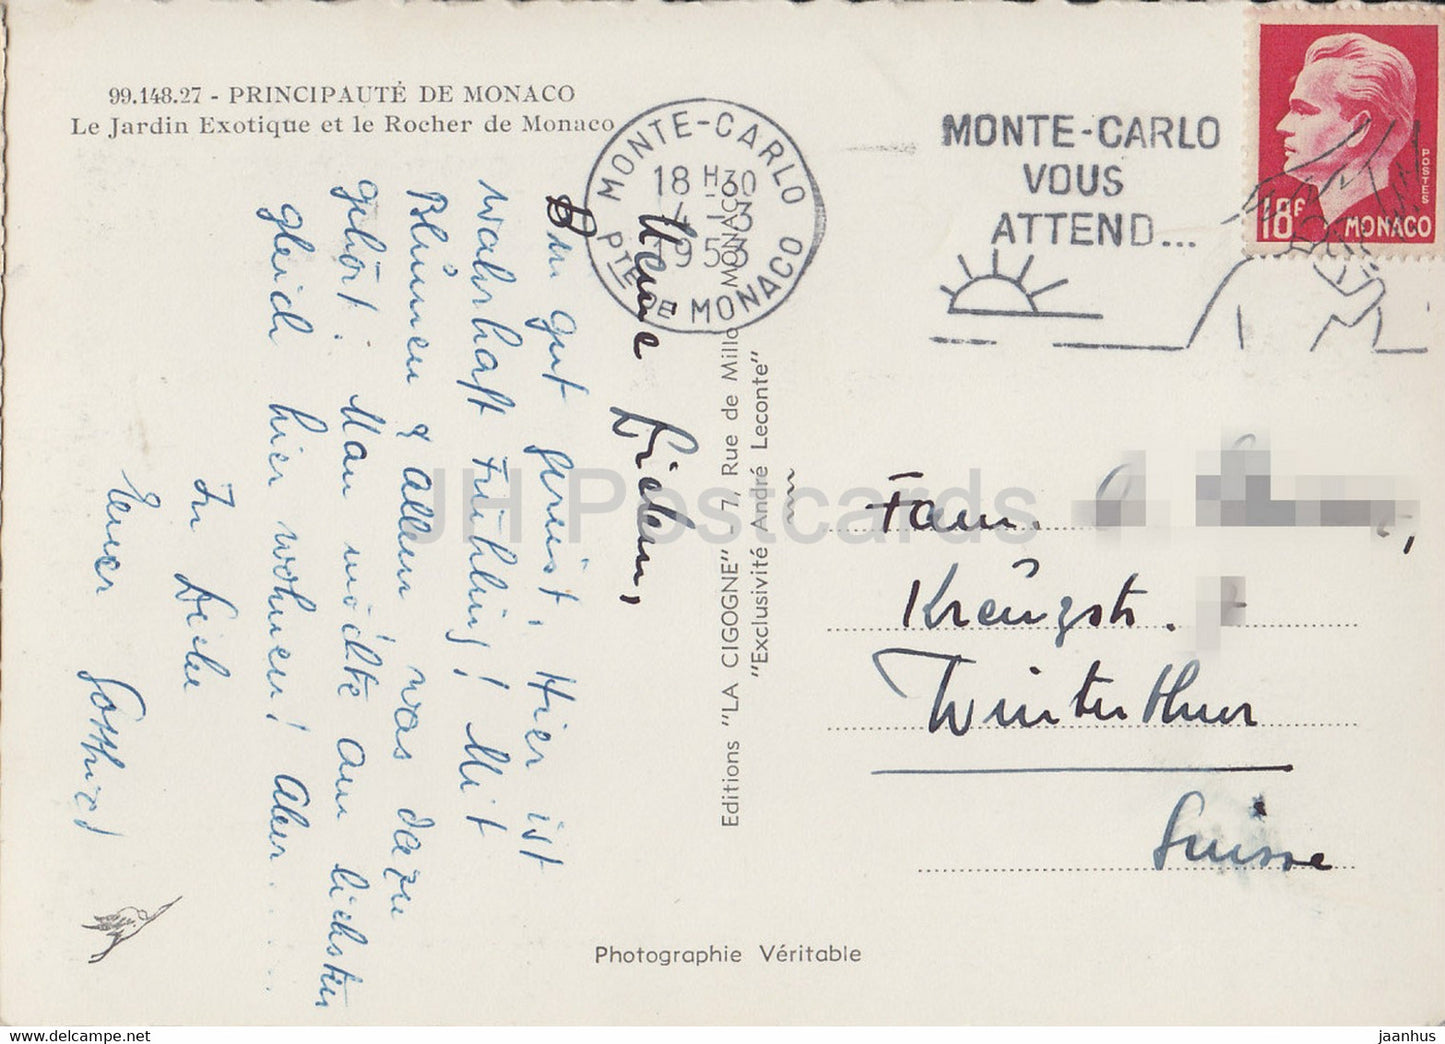 Le Jardin Exotique et le Rocher de Monaco – alte Postkarte – 1953 – Monaco – gebraucht